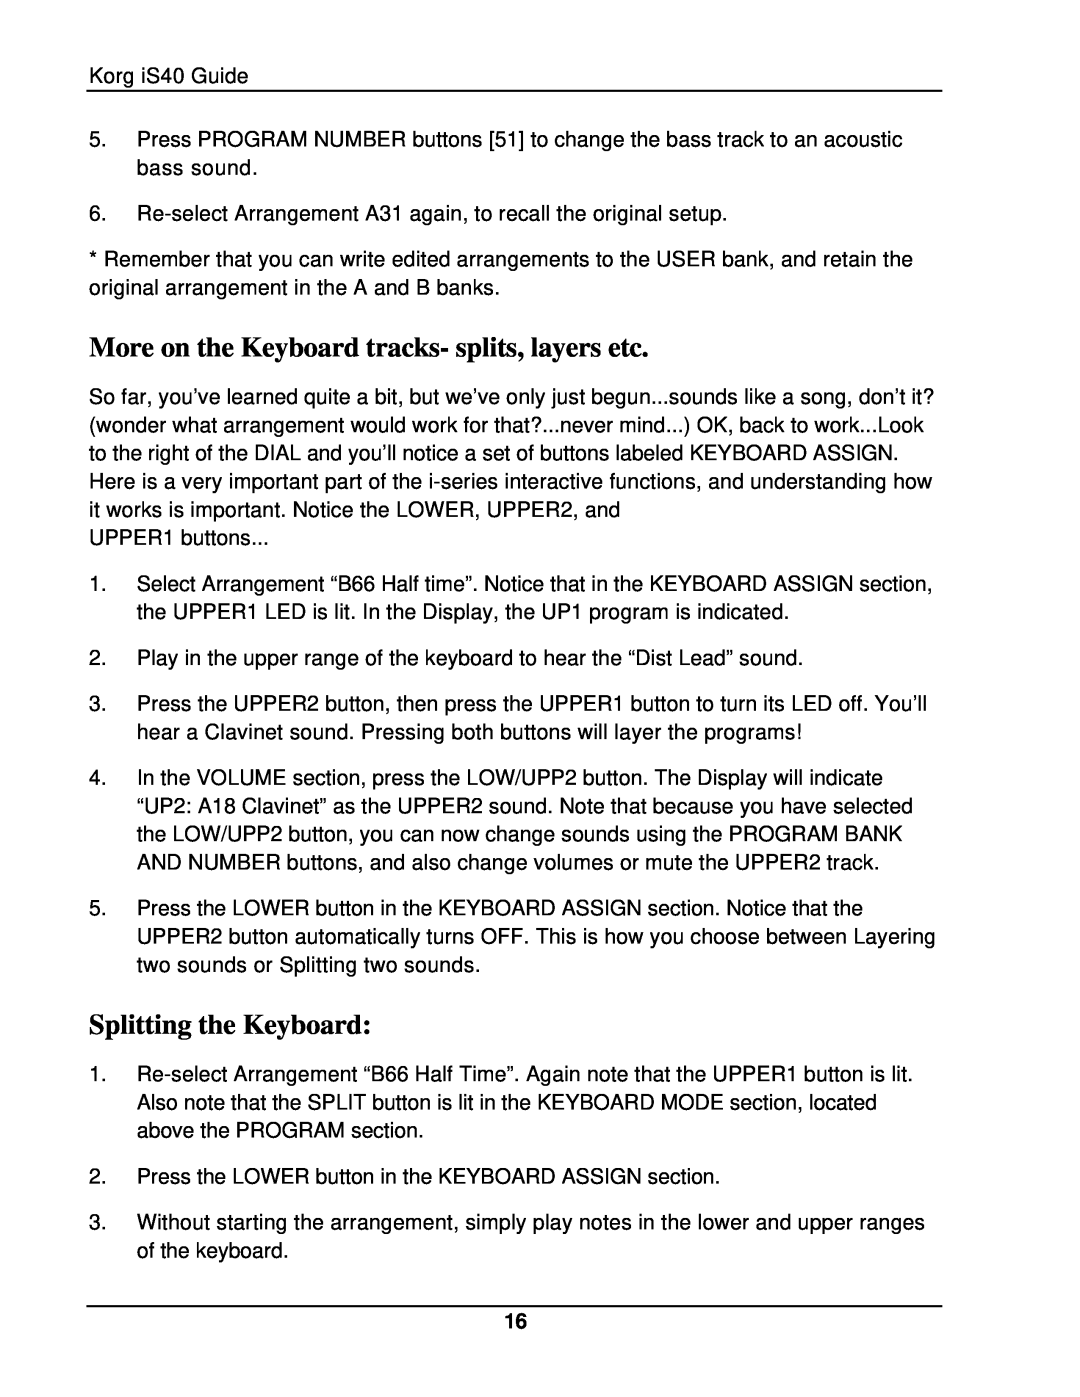 Korg The iS40 manual More on the Keyboard tracks- splits, layers etc, Splitting the Keyboard 